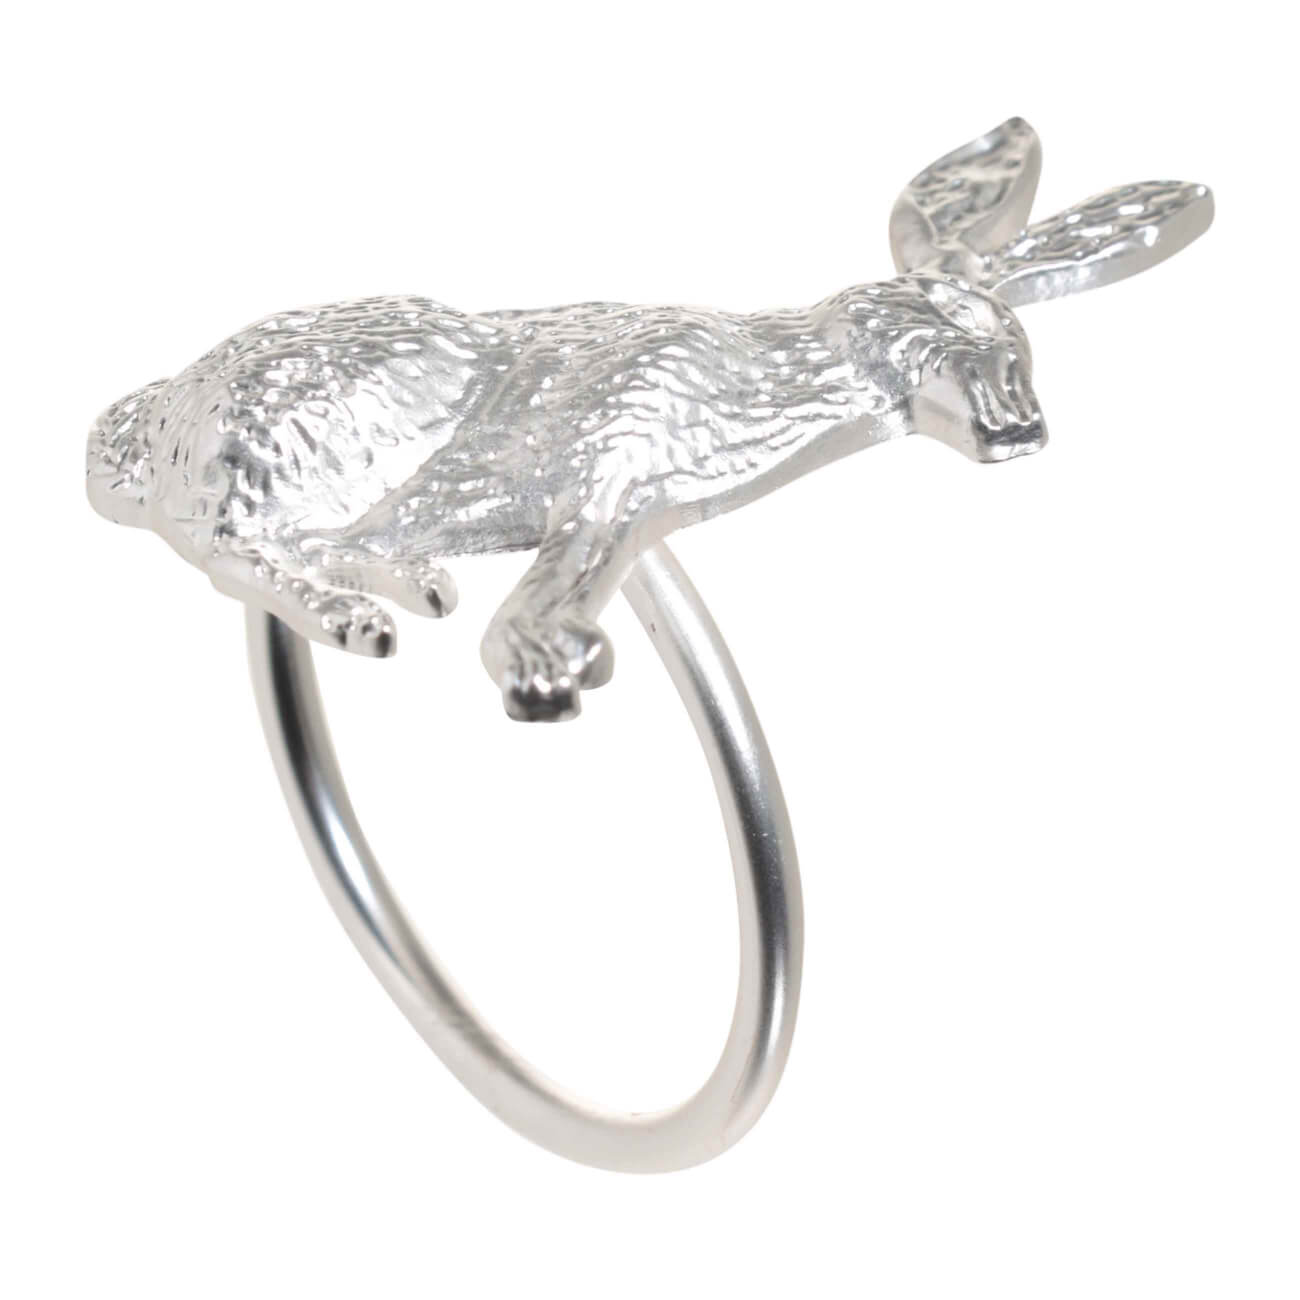 kuchenland кольцо для салфеток 5 см 2 шт металл серебристое кольцо fantastic r Кольцо для салфеток, 5 см, металл, серебристое, Кролик, Pure Easter